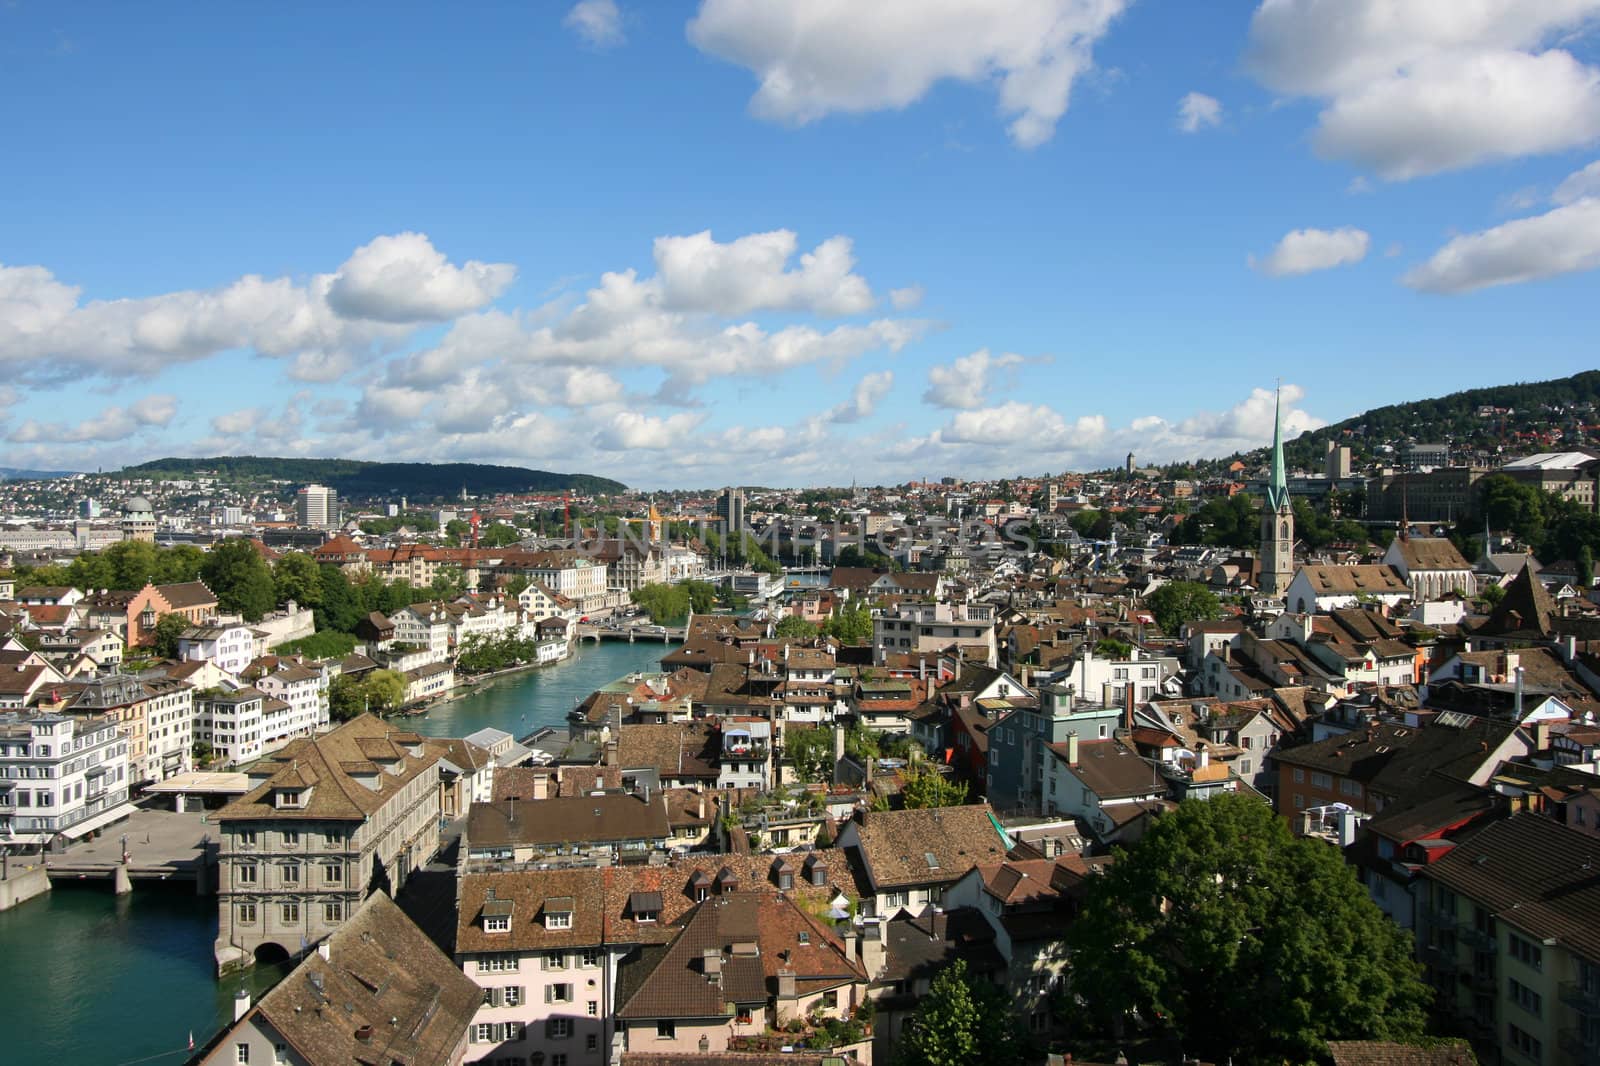 Zurich, Switzerland - cityscape of beautiful old town